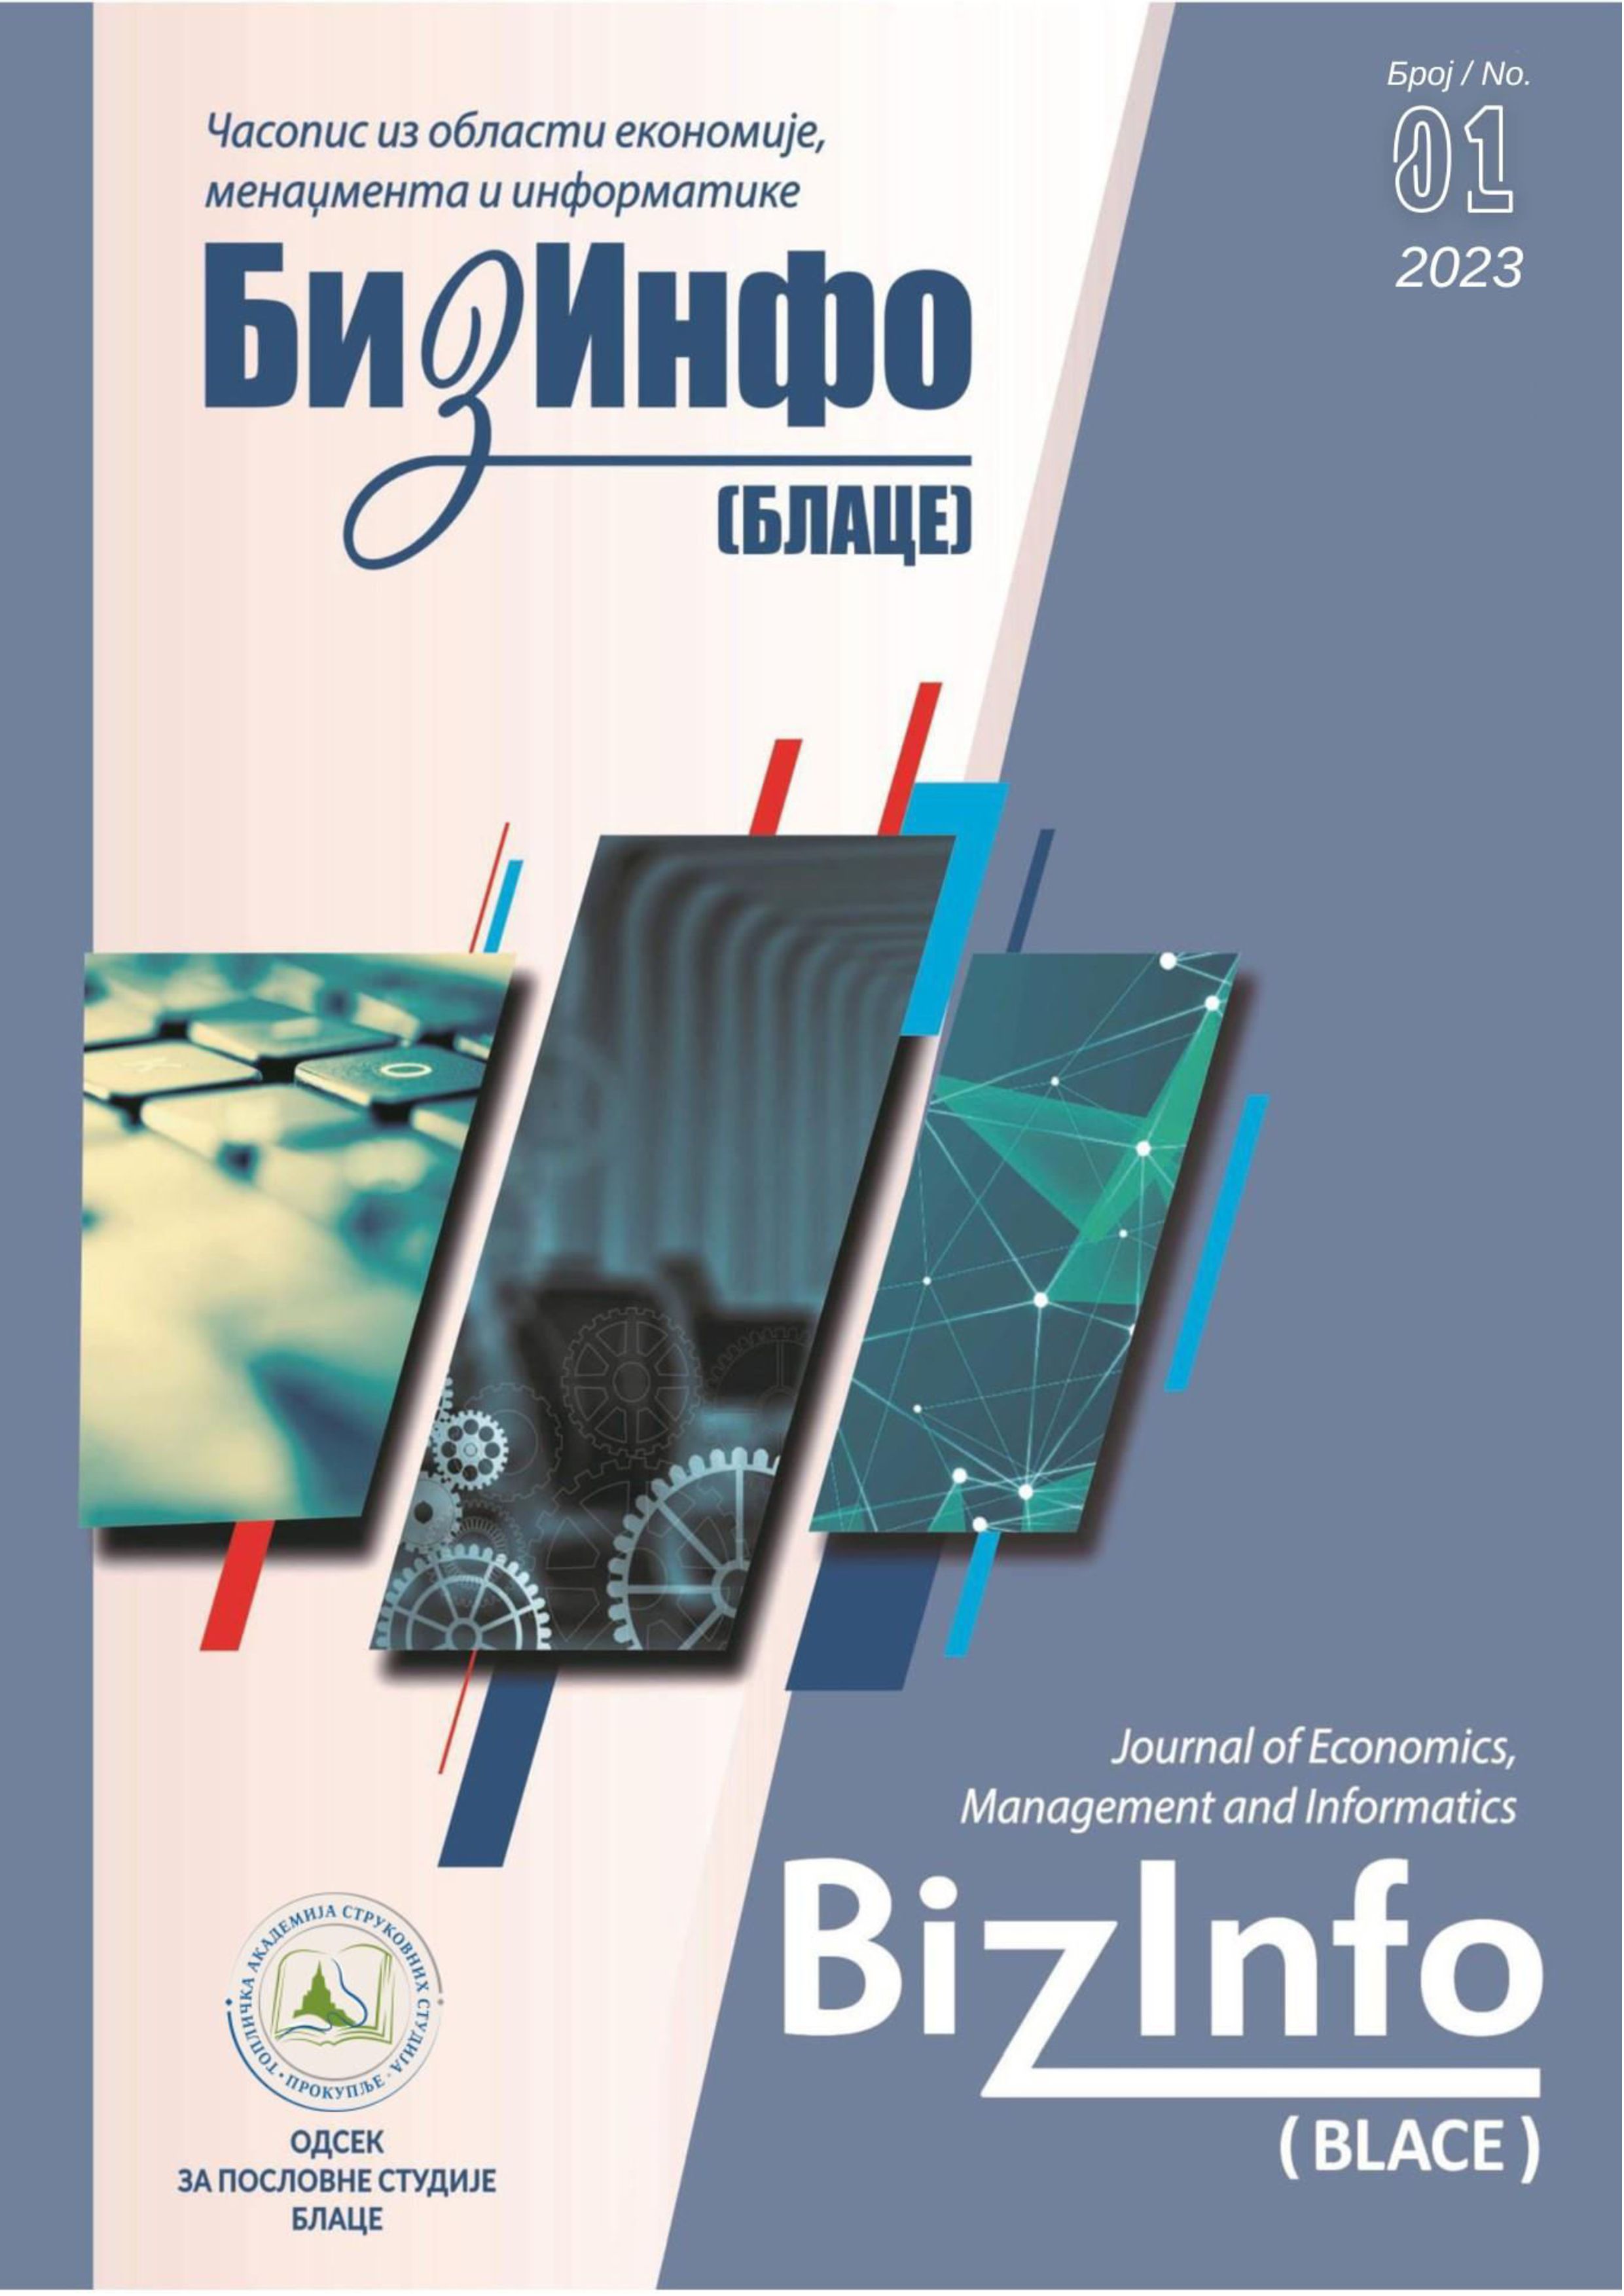 					View Vol. 14 No. 1 (2023): BizInfo (Blace) Journal of Economics, Management and Informatics
				